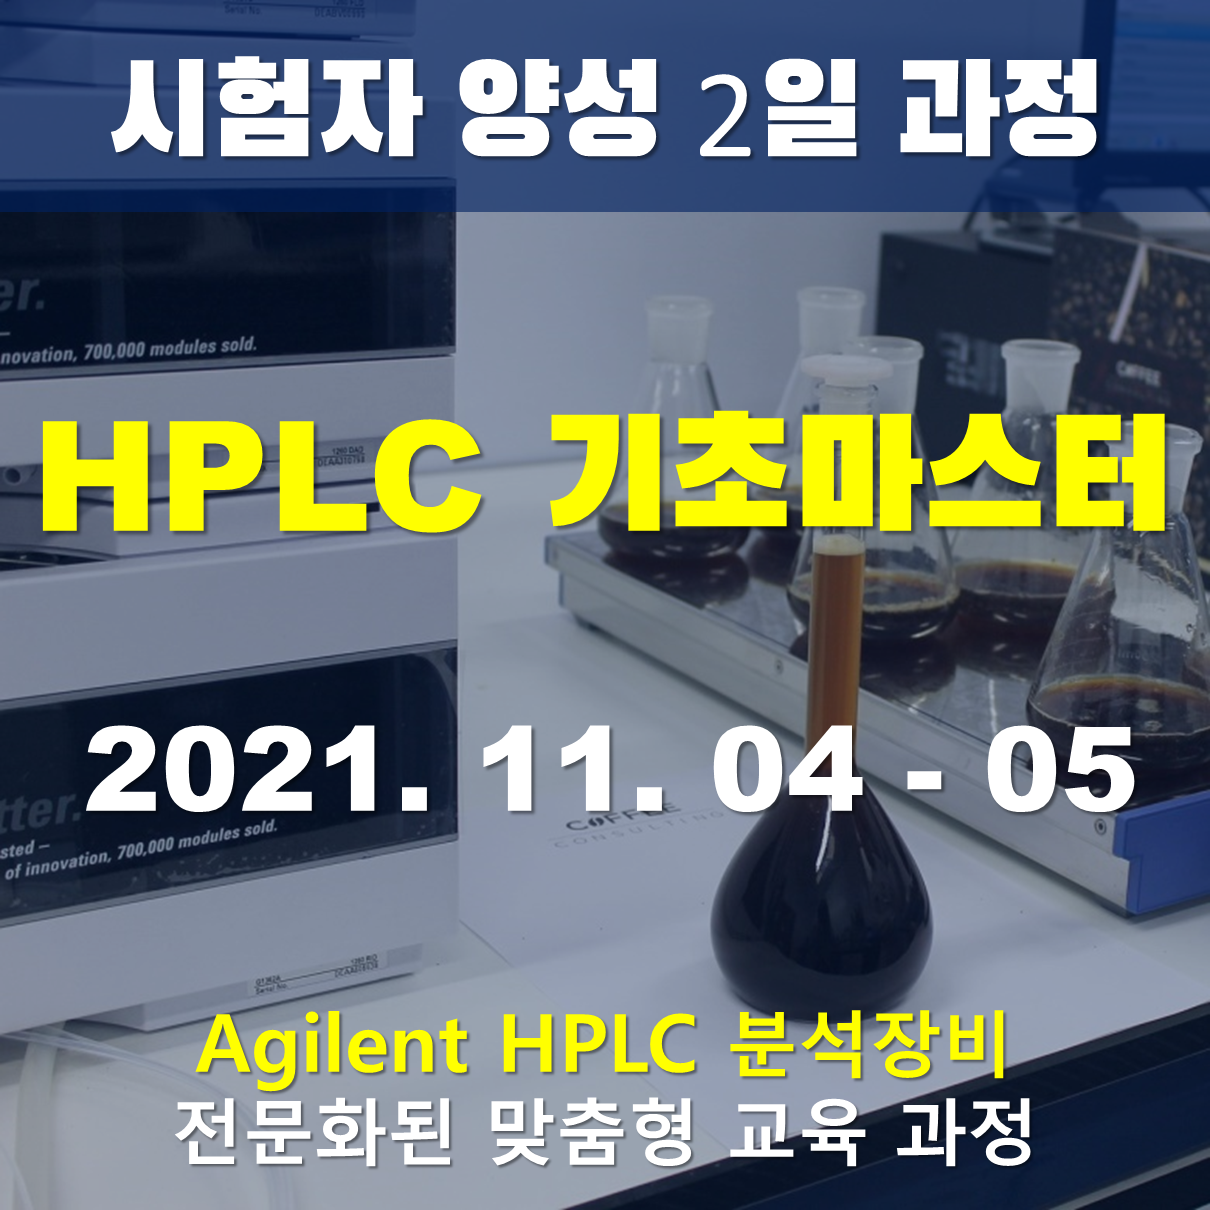 Agilent HPLC 기초 마스터 - 분석/보고서작성/유지관리 (2일 과정)